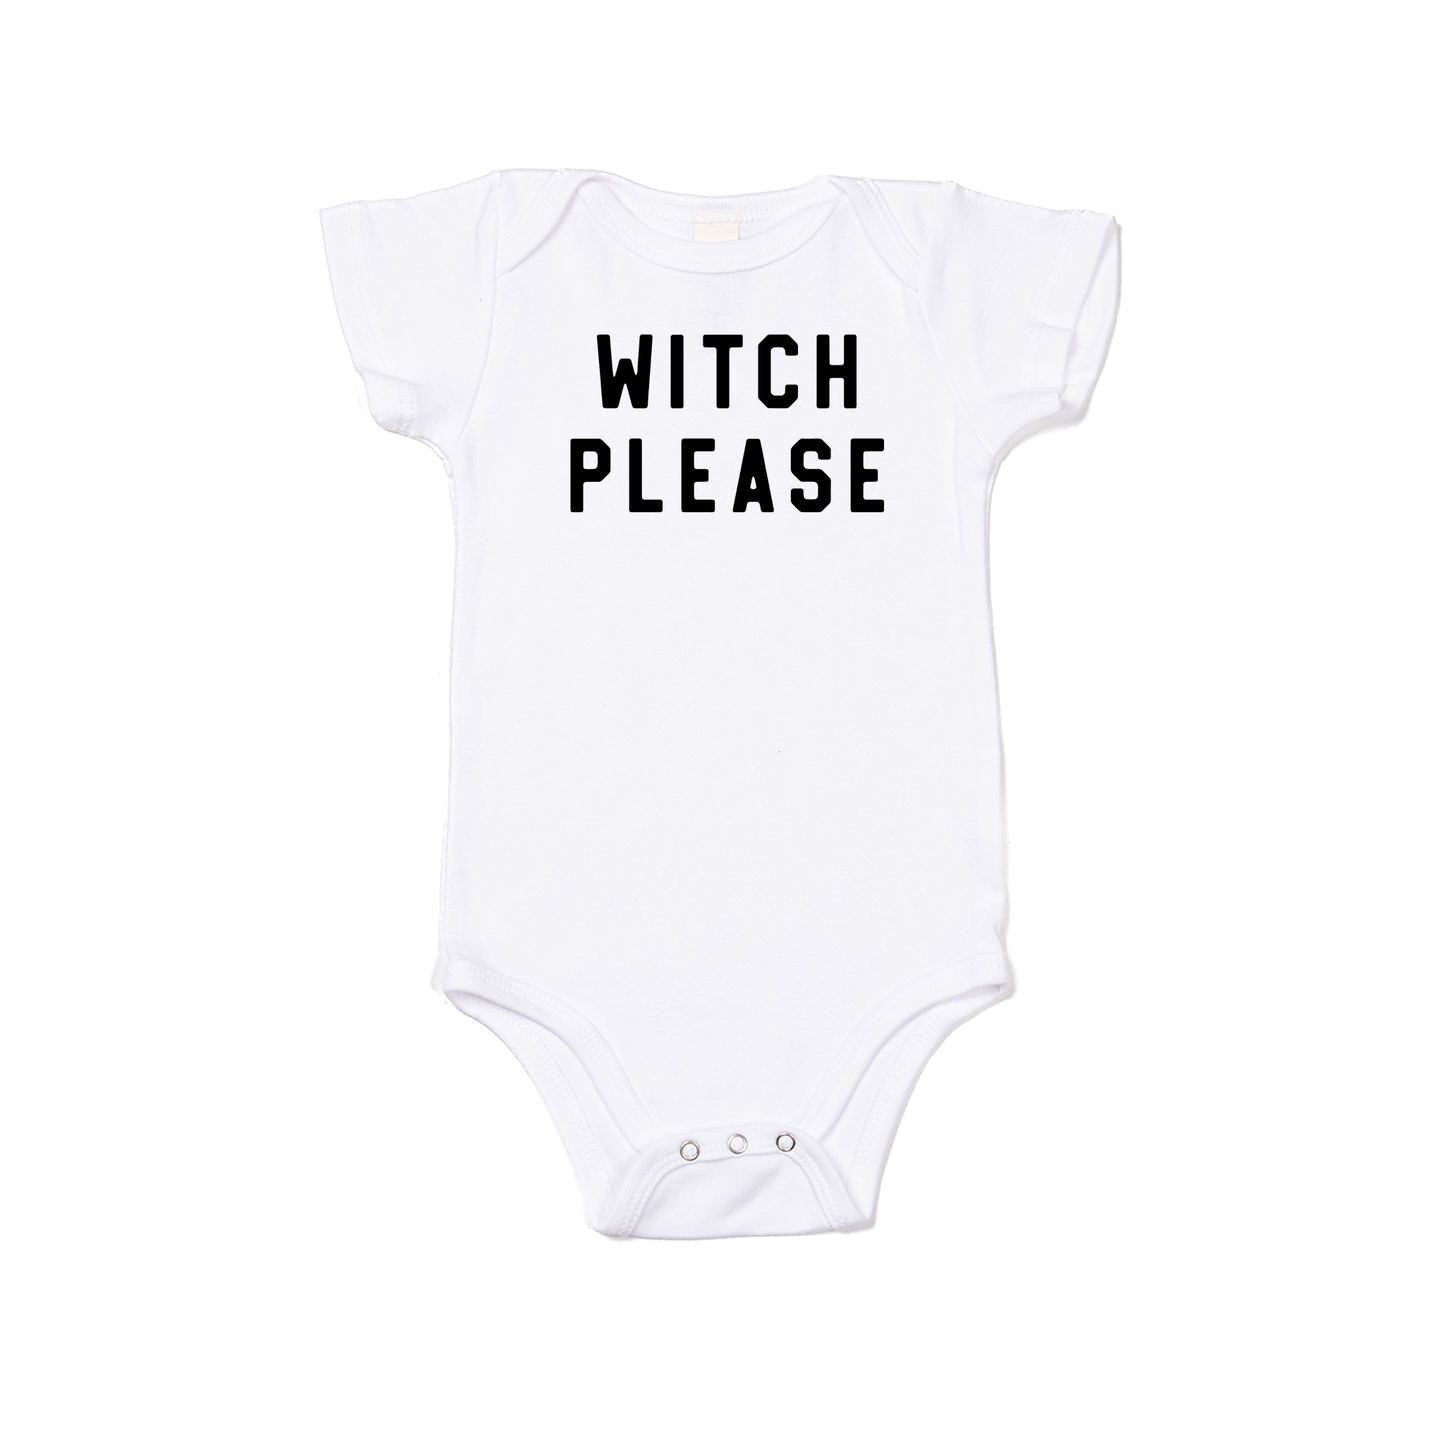 Witch Please (Black) - Bodysuit (White, Short Sleeve)